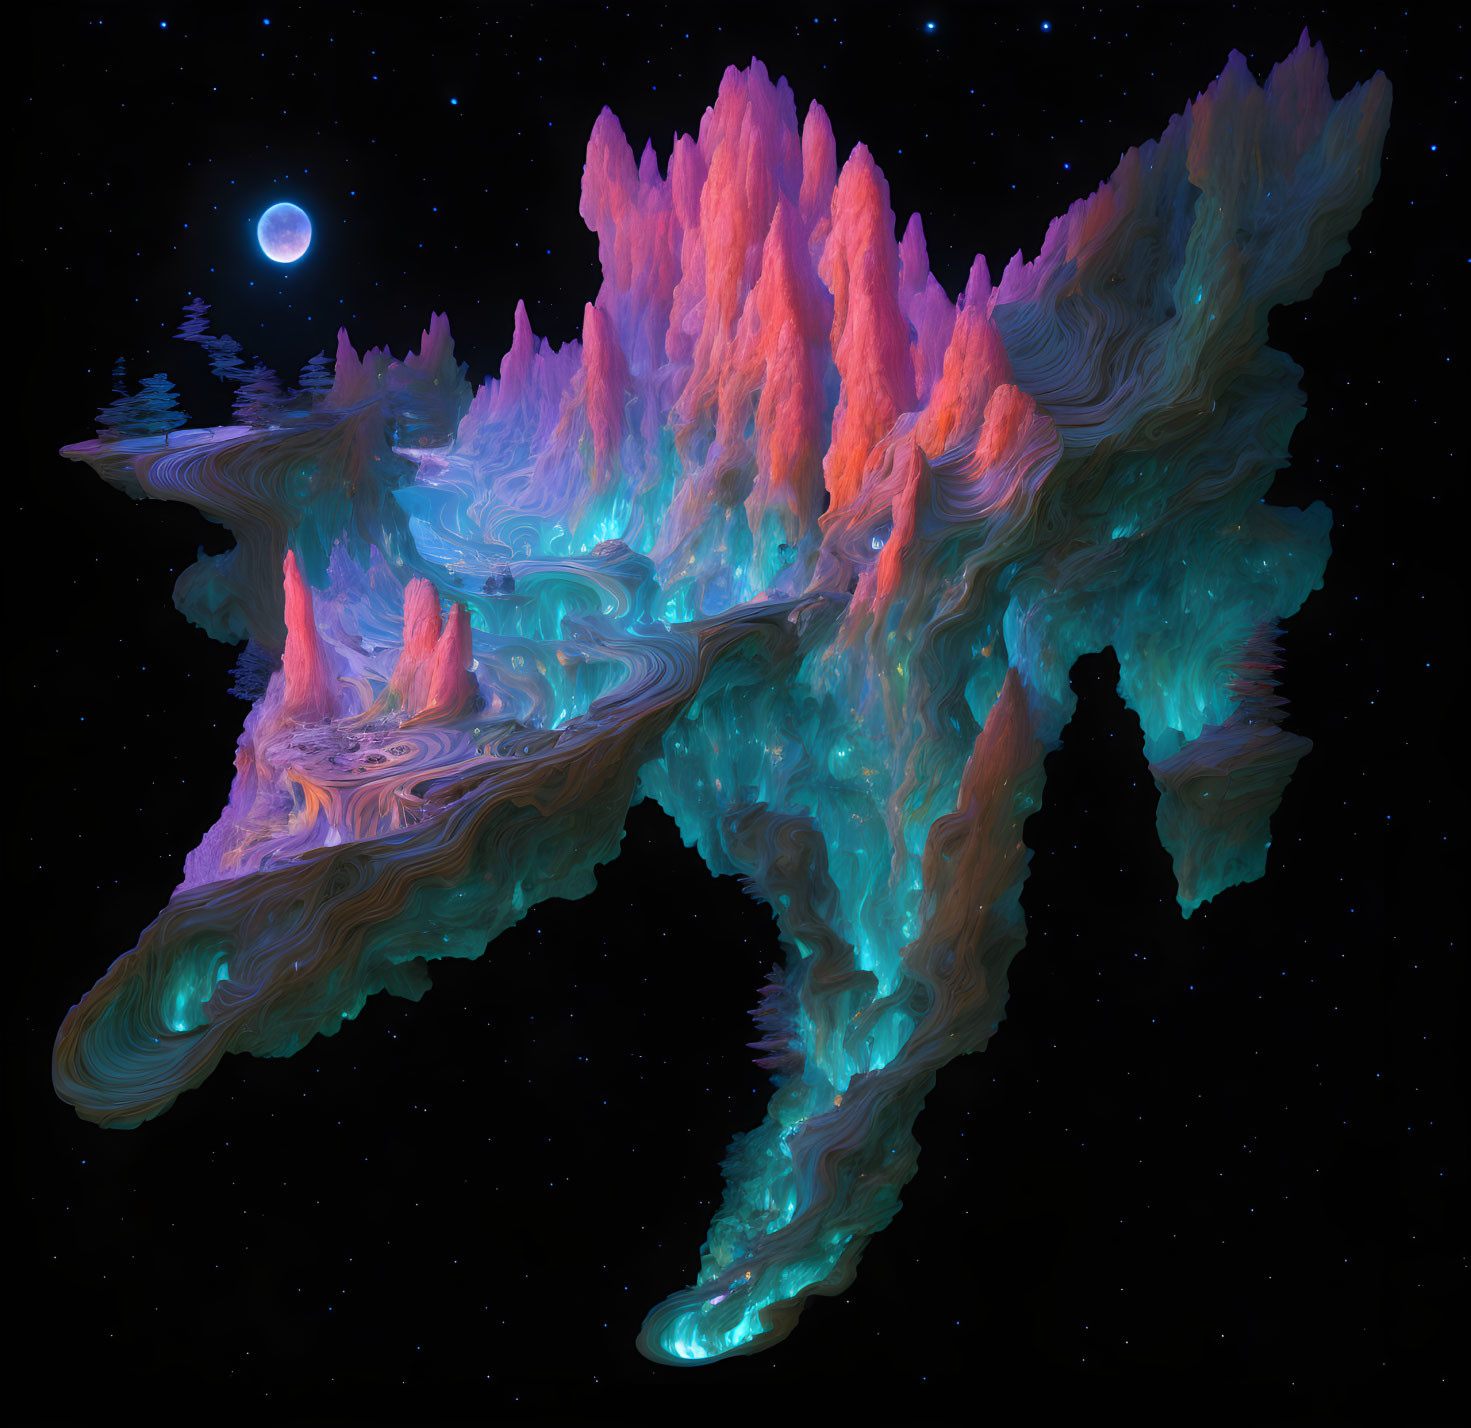 Abstract digital artwork: Fiery peaks, turquoise valleys, swirling textures under starry sky